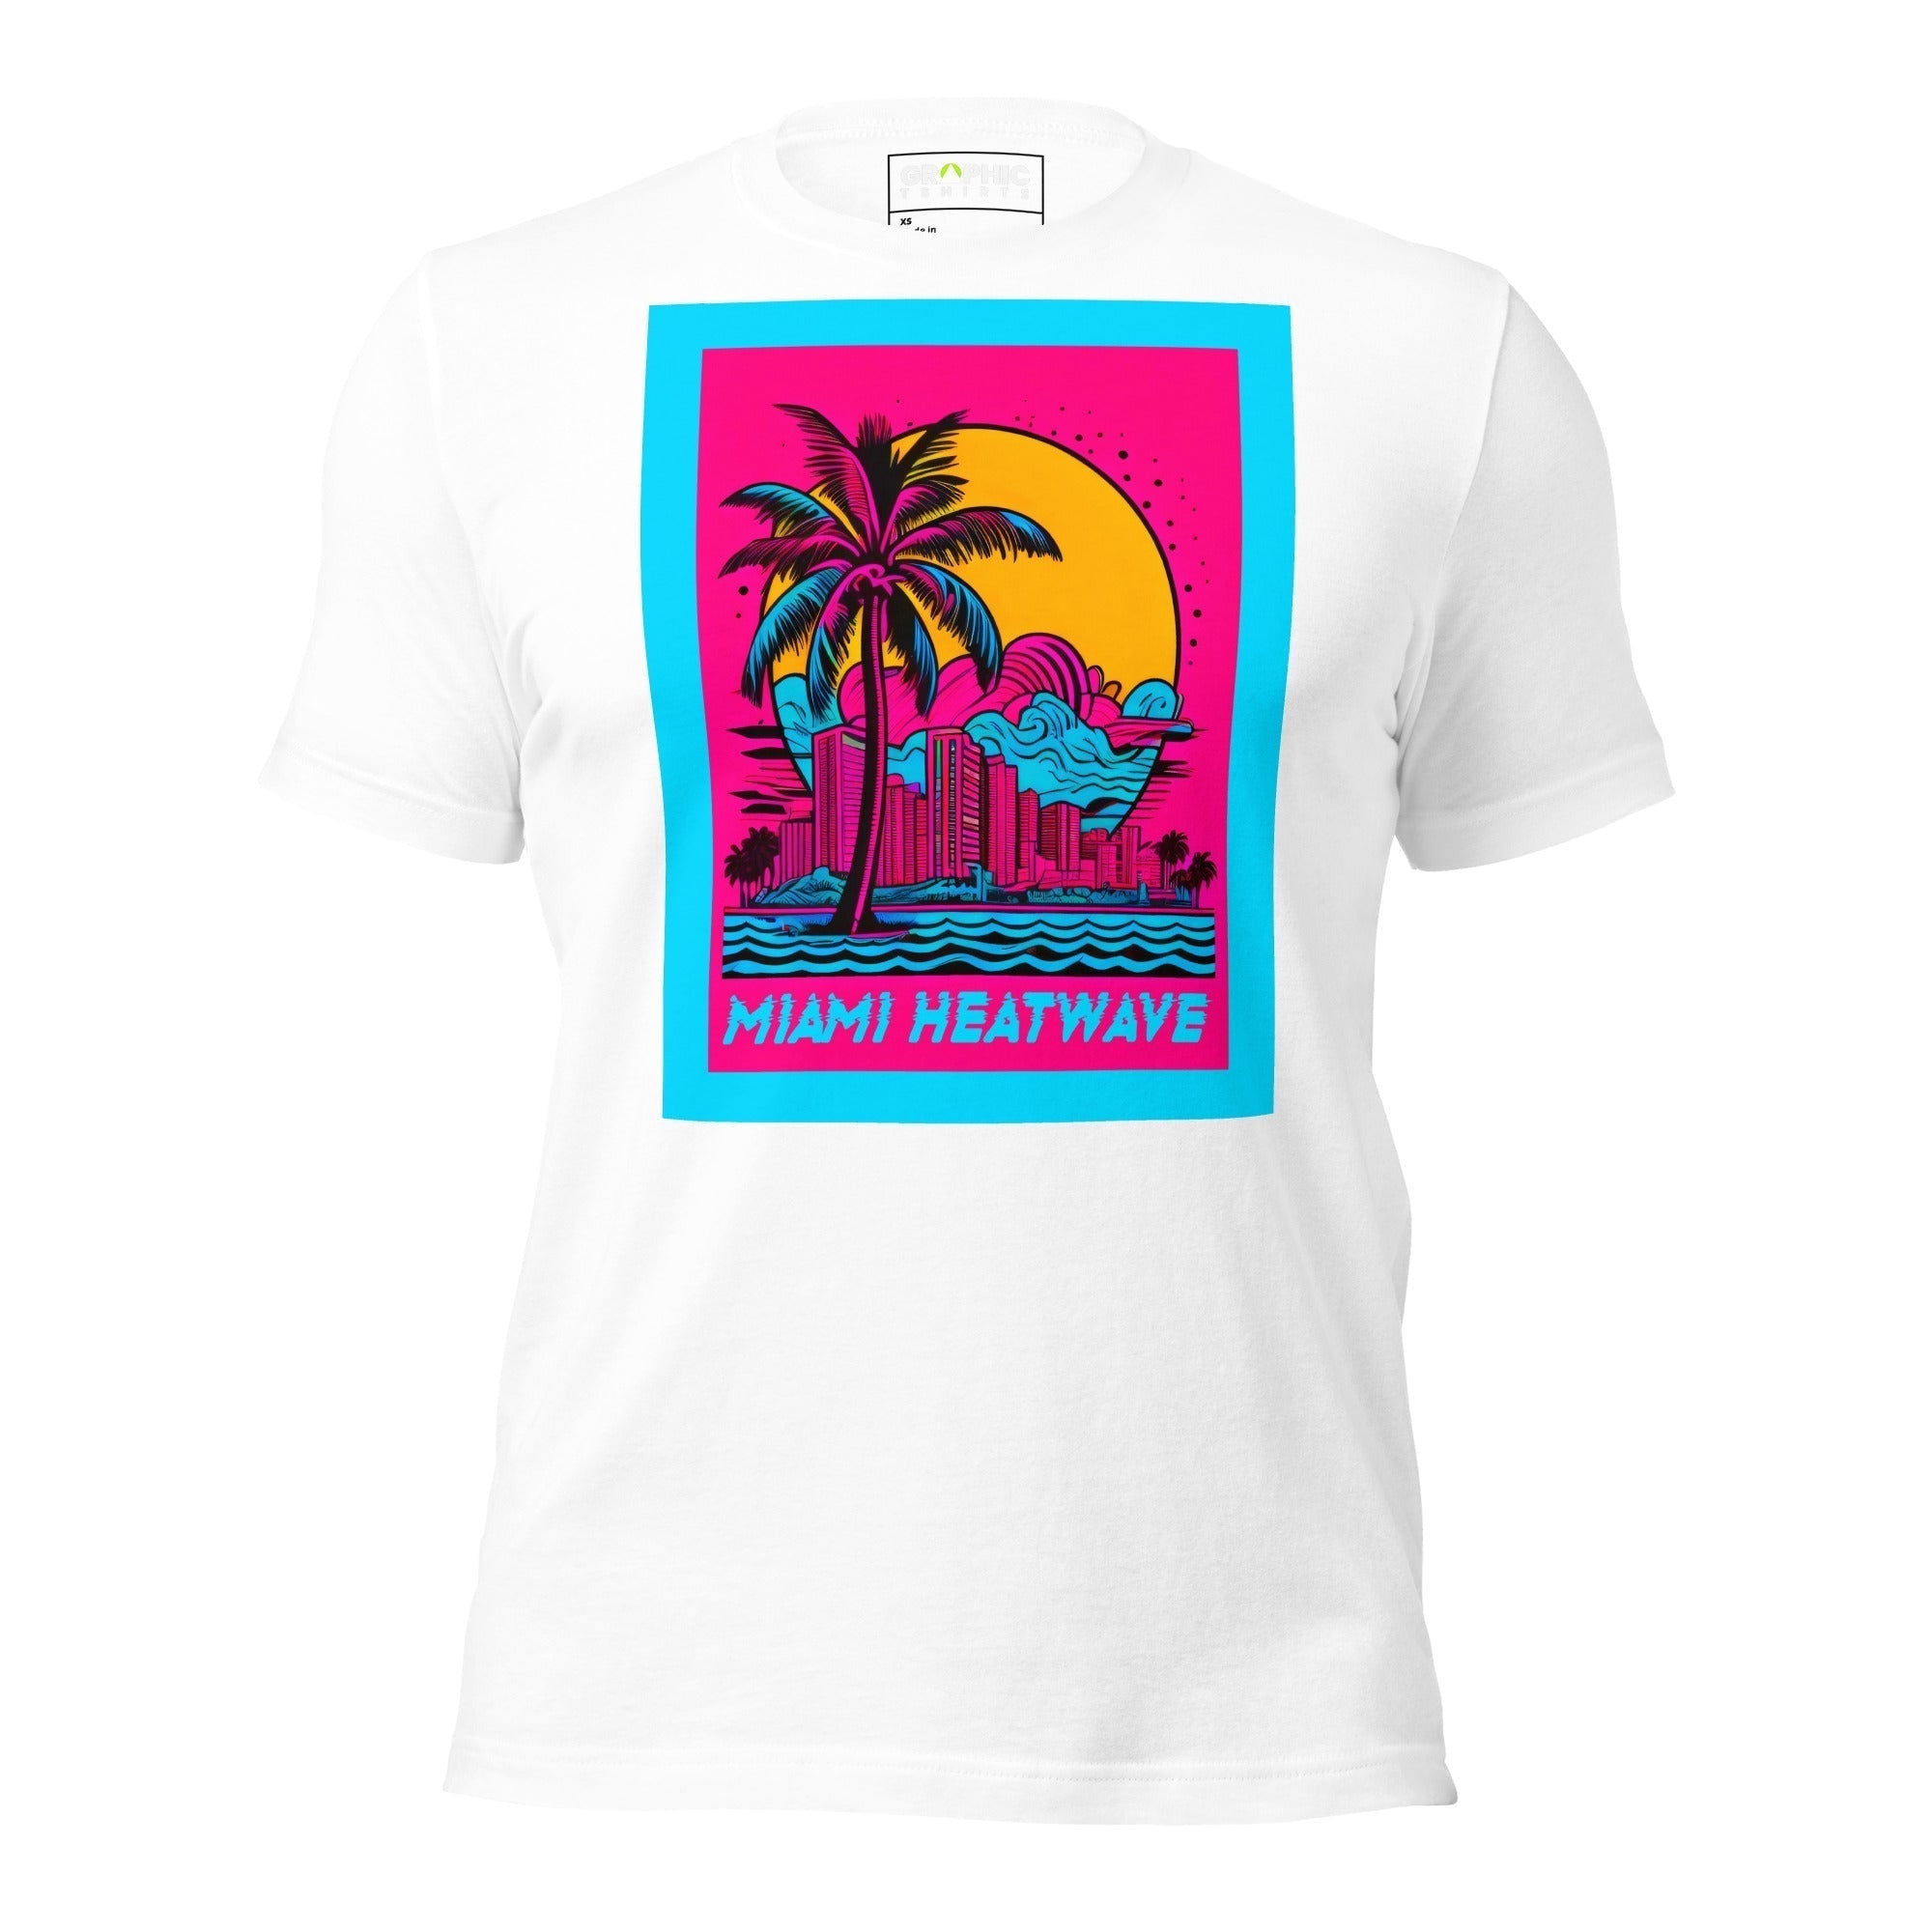 Unisex Crew Neck T-Shirt - Miami Heatwave Series v.17 - GRAPHIC T-SHIRTS